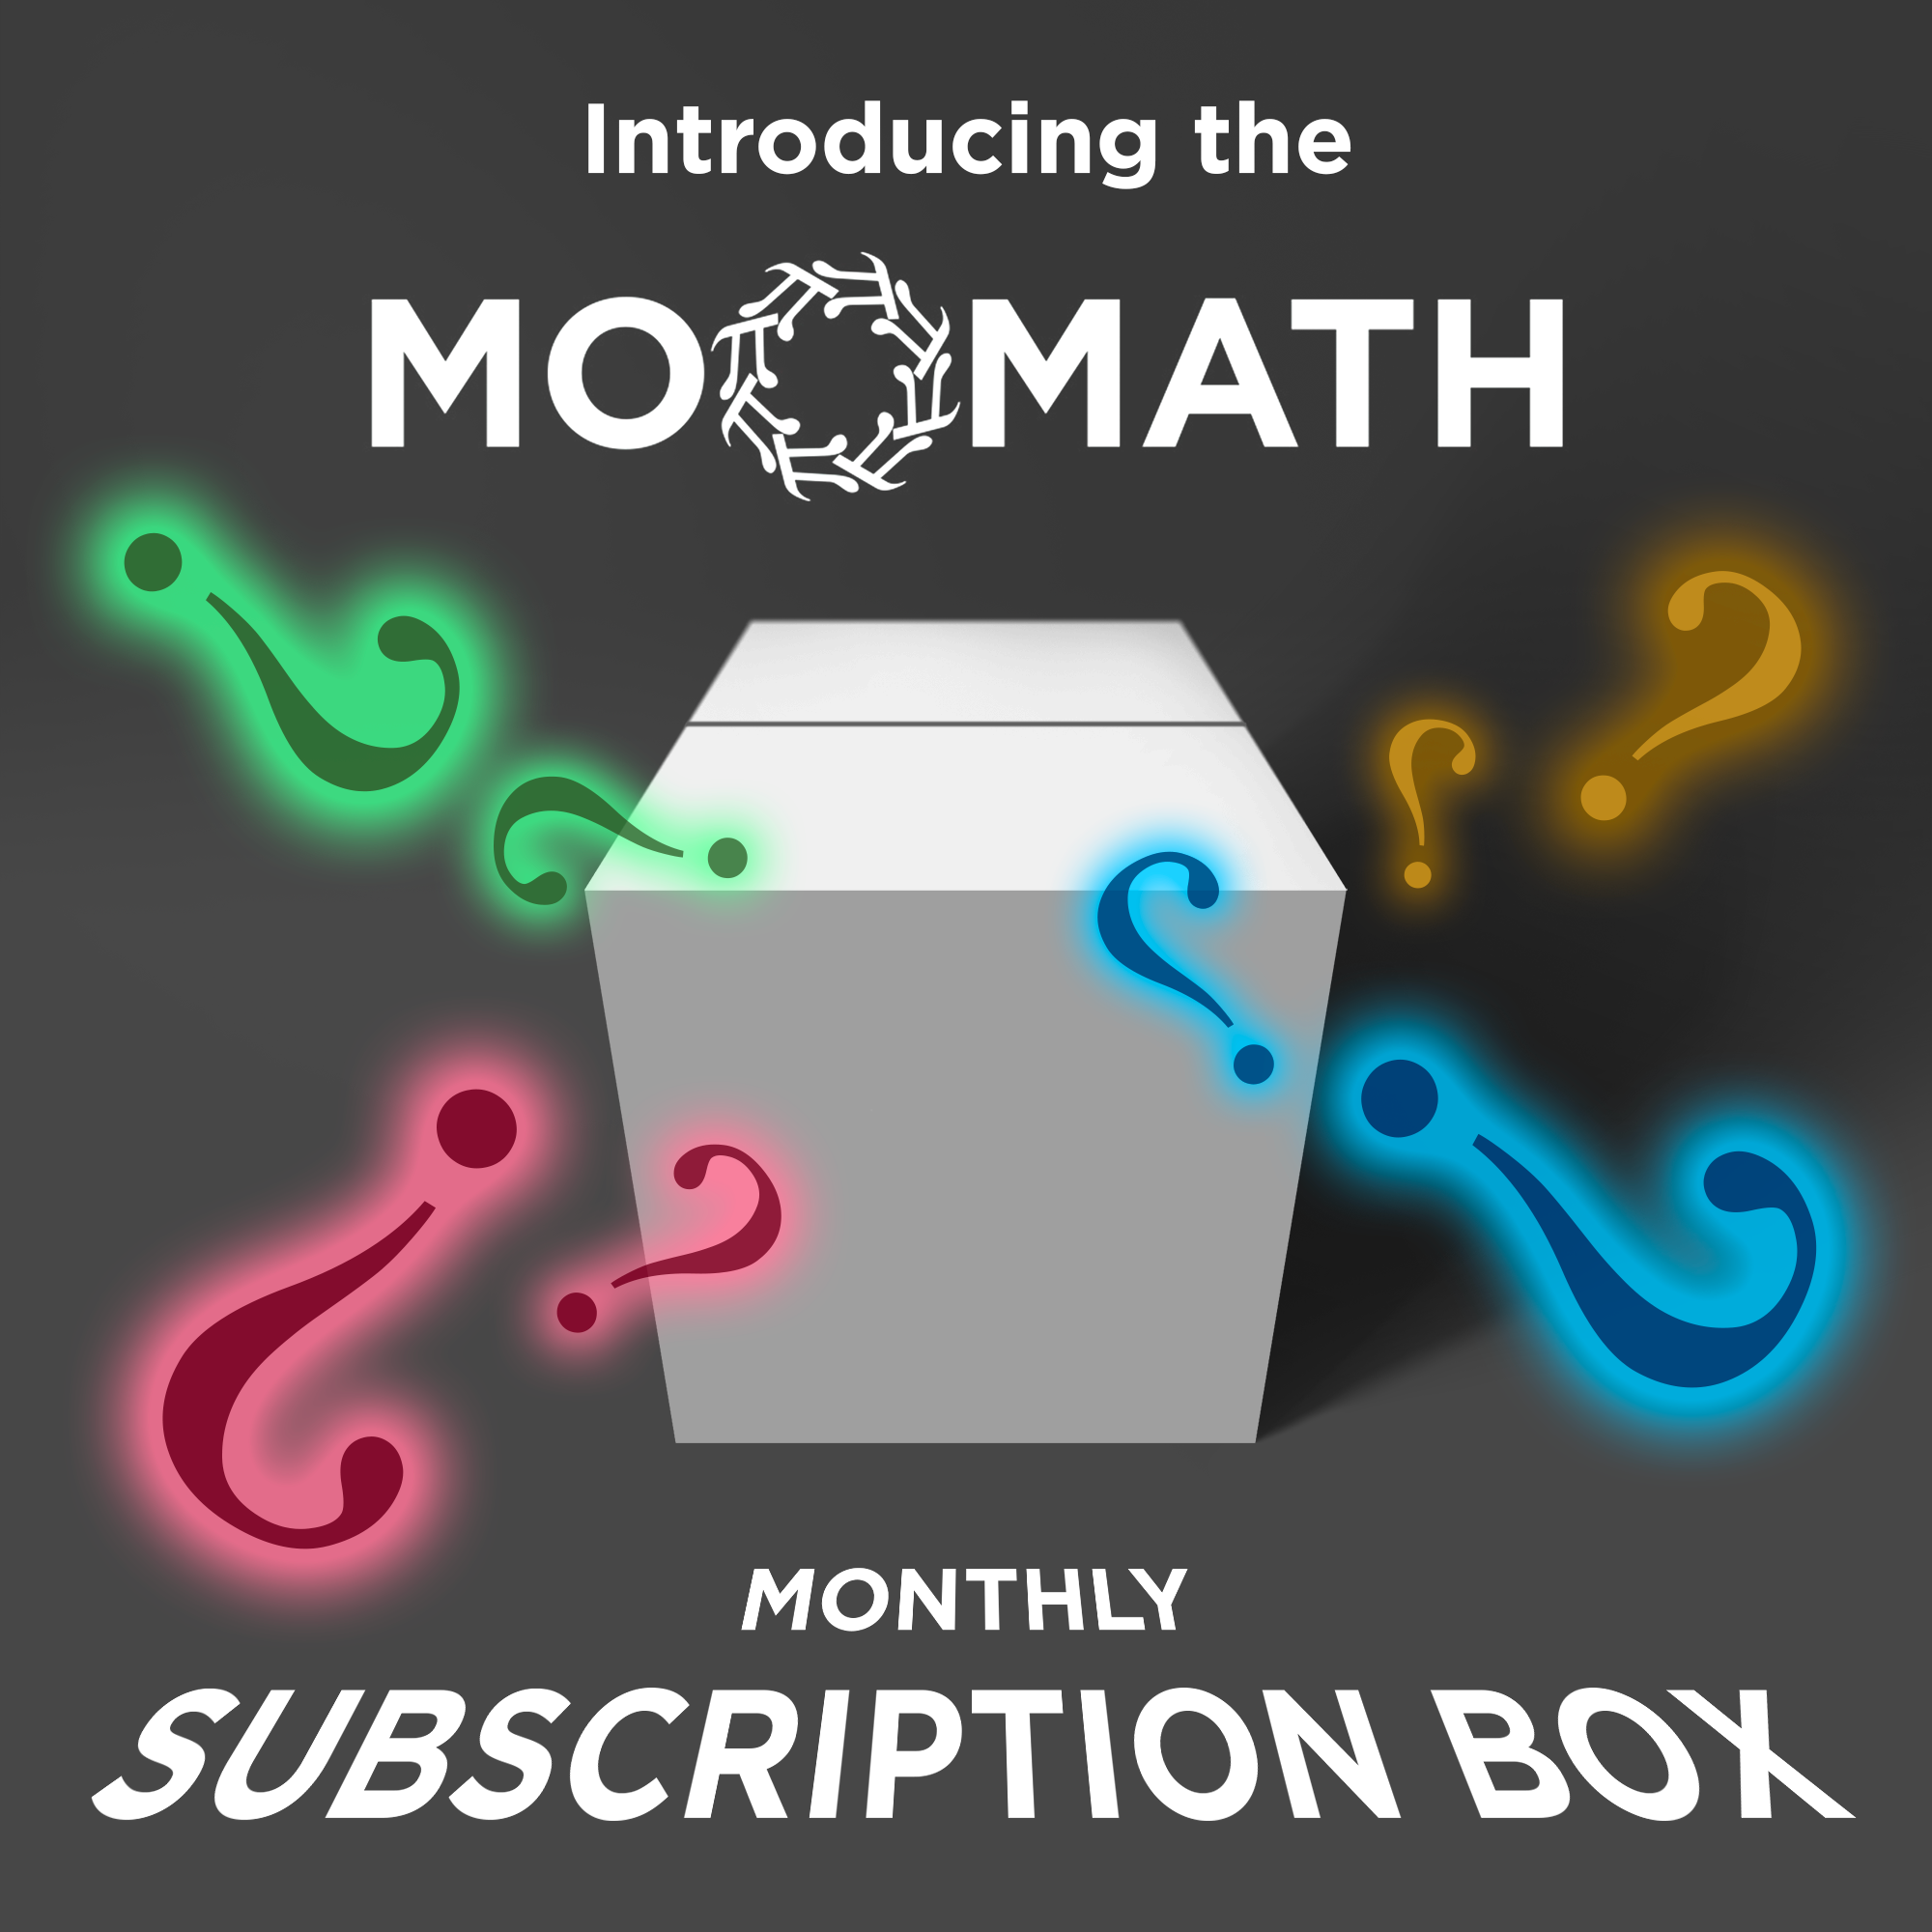 MoMath Subscription Box - 1 year